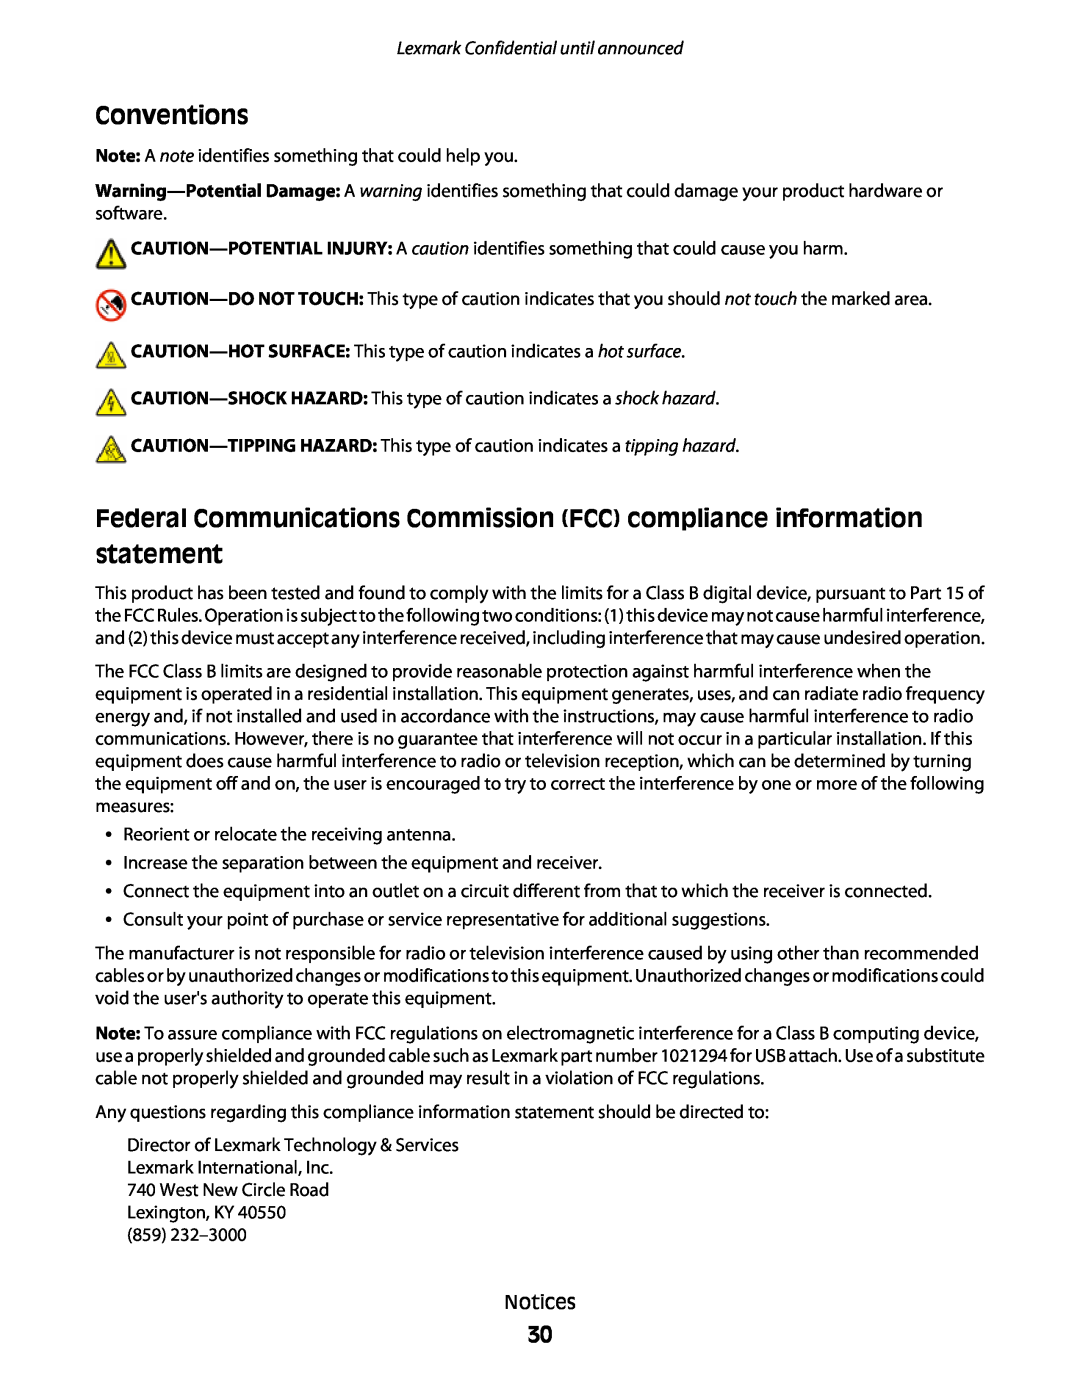 Lexmark P200 manual Conventions, Lexmark Confidential until announced 